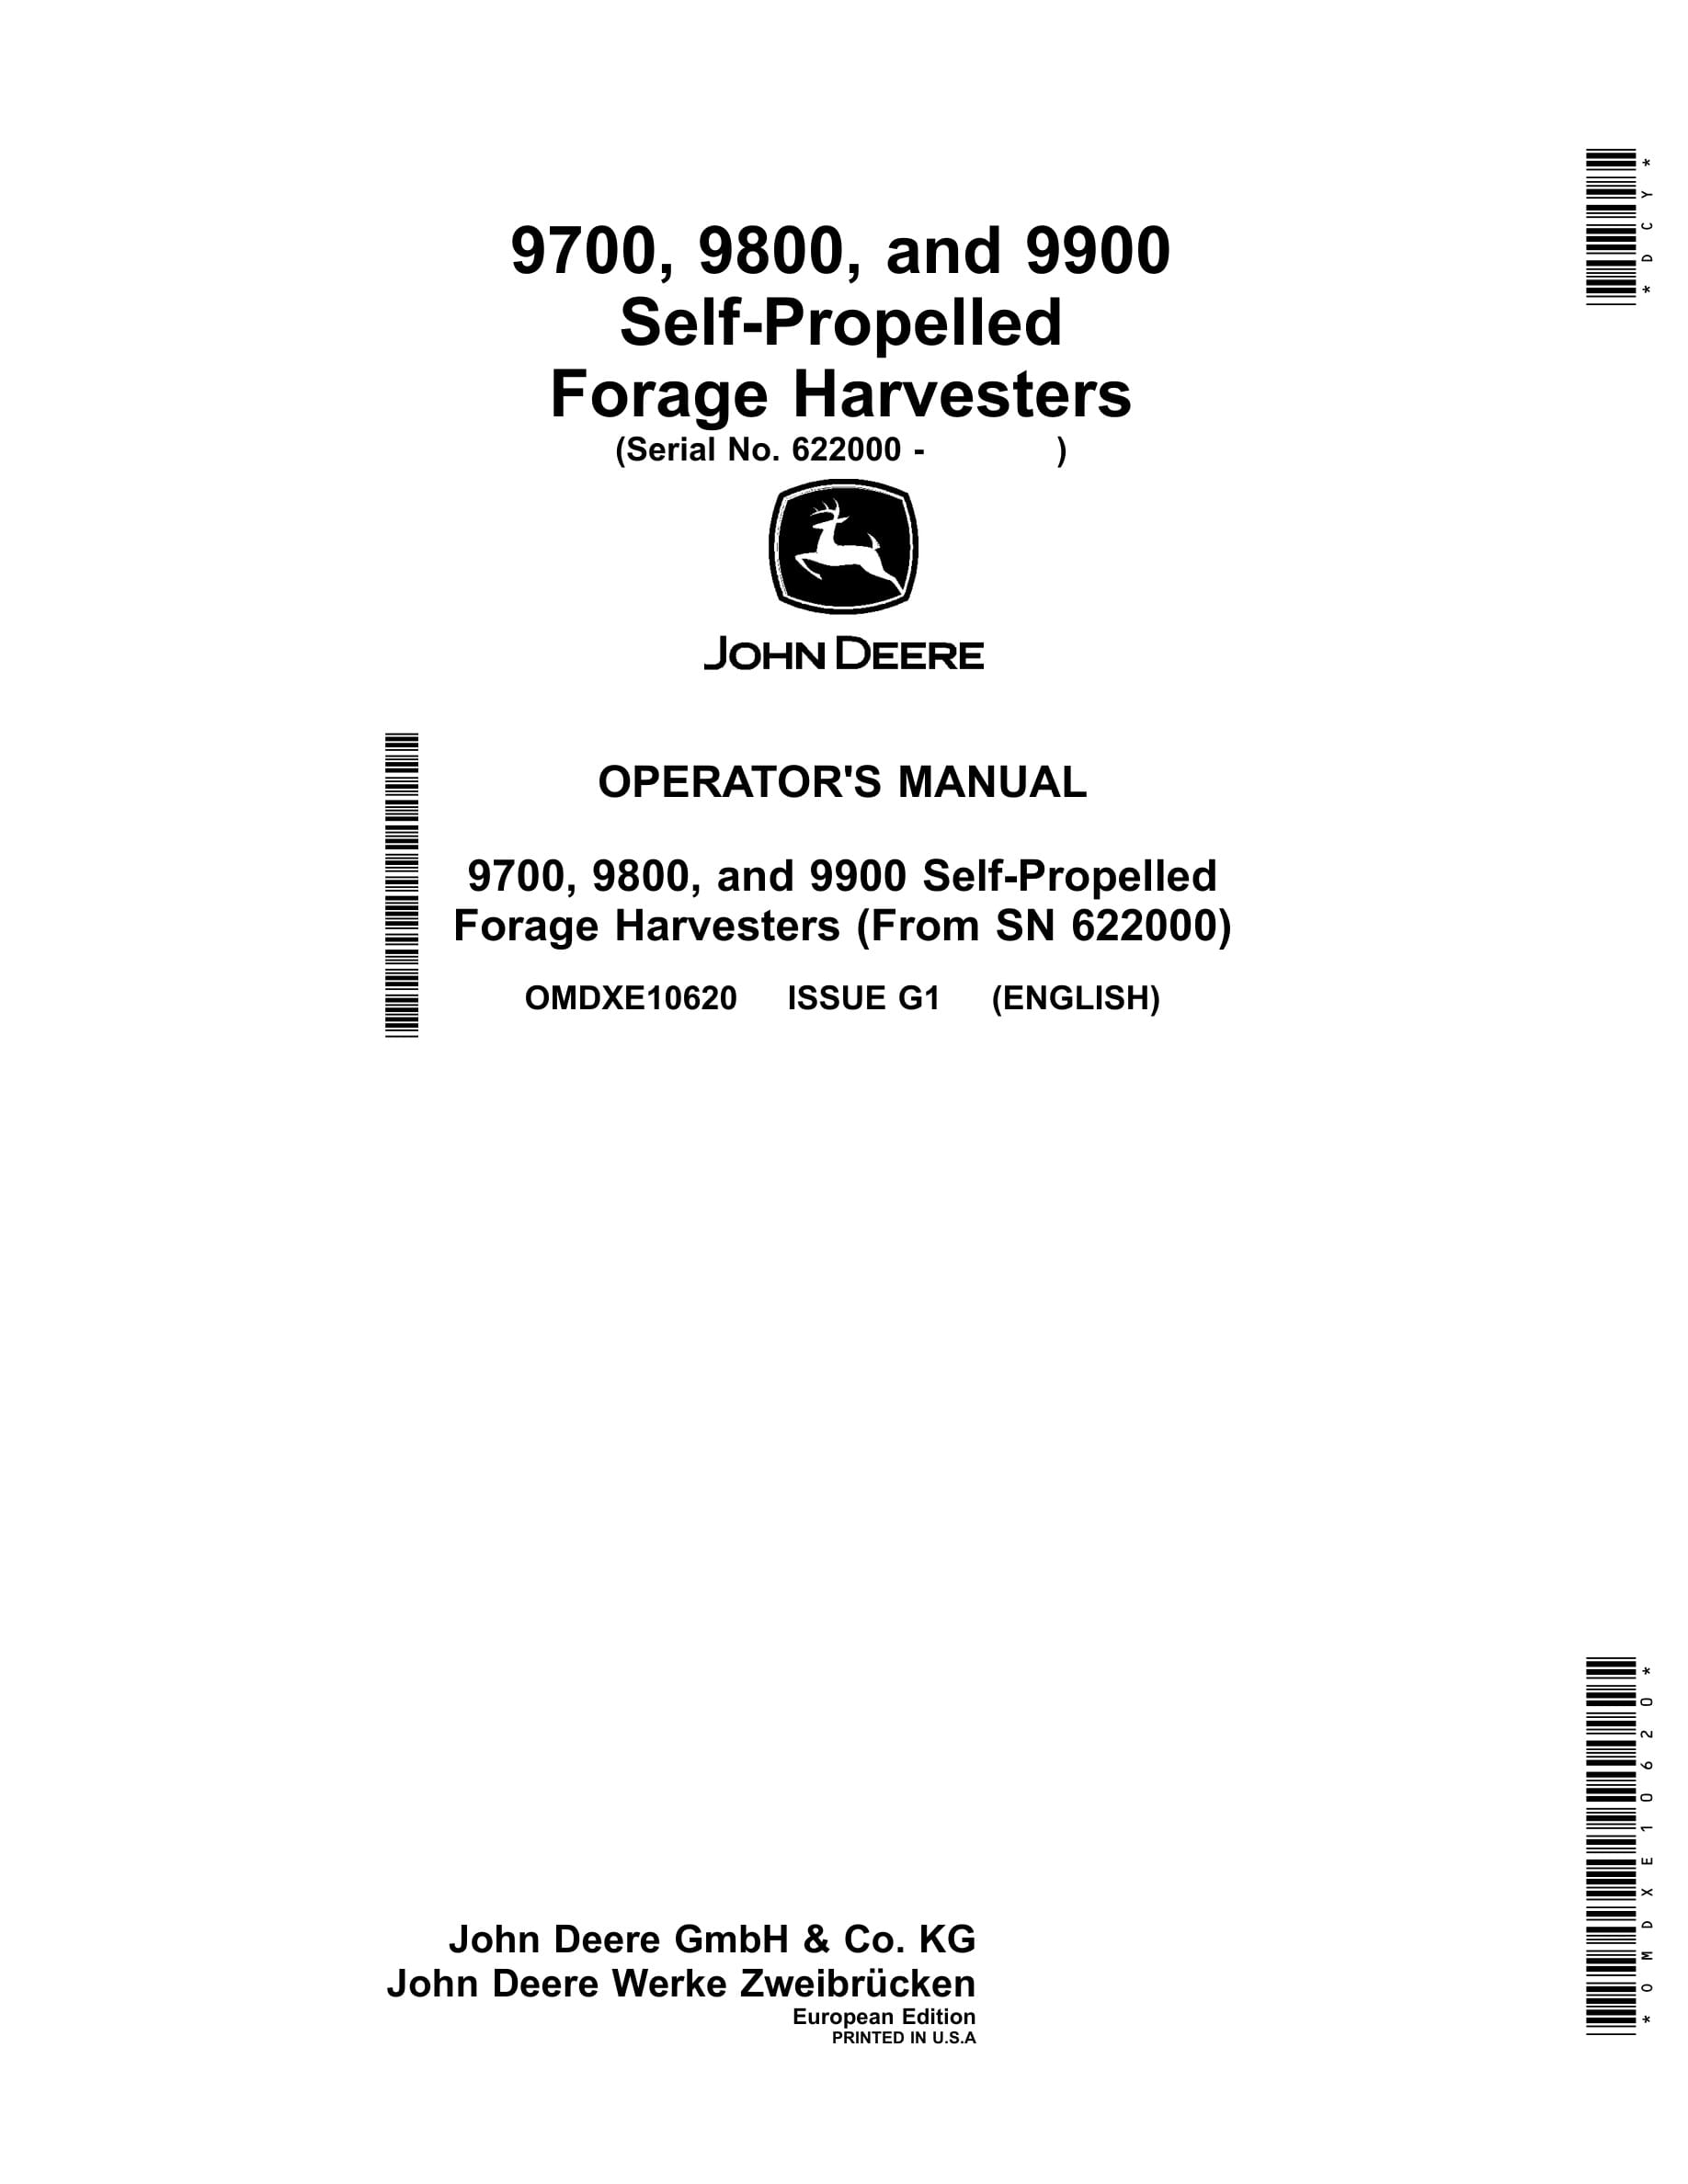 John Deere 9700, 9800, and 9900 Self-Propelled Forage Harvester Operator Manual OMDXE10620-1